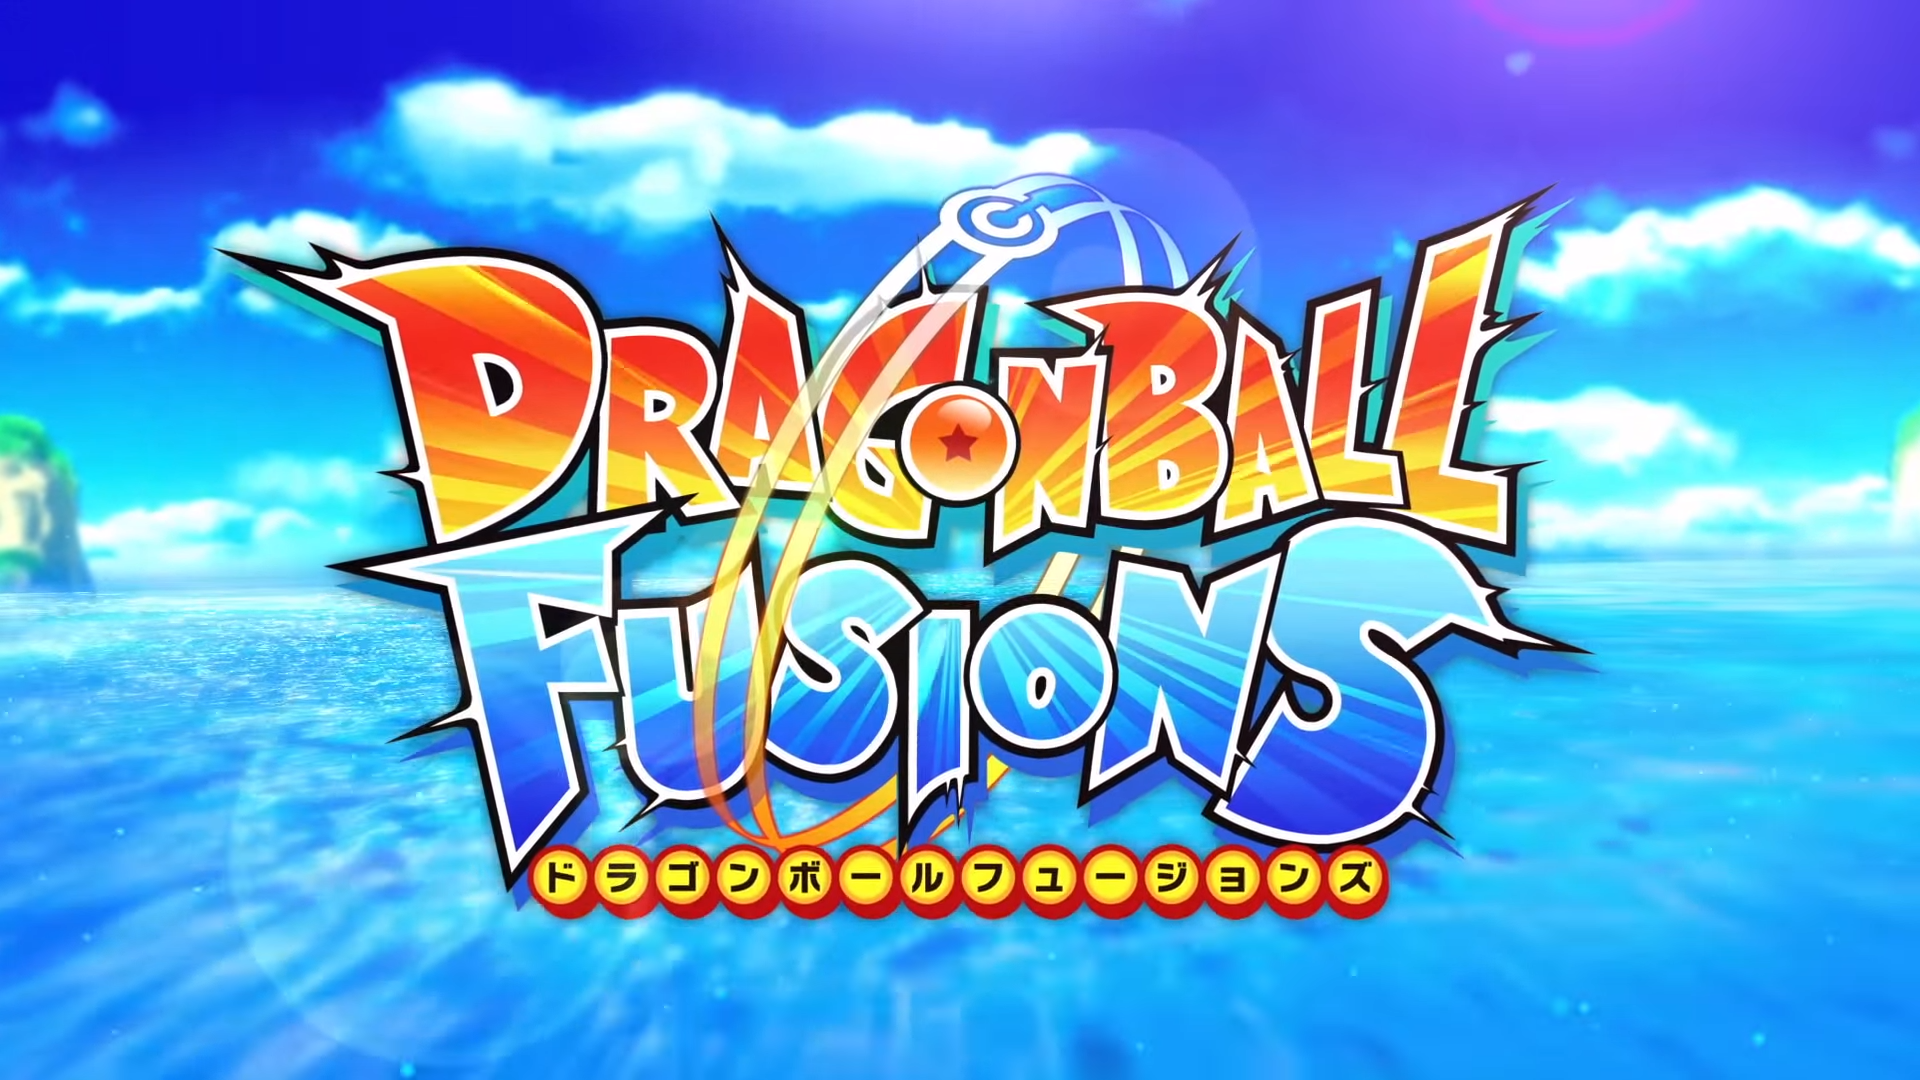 Bandai Namco anuncia Dragon Ball Fusion, un nuevo RPG para Nintendo 3DS con Bundle Incluido